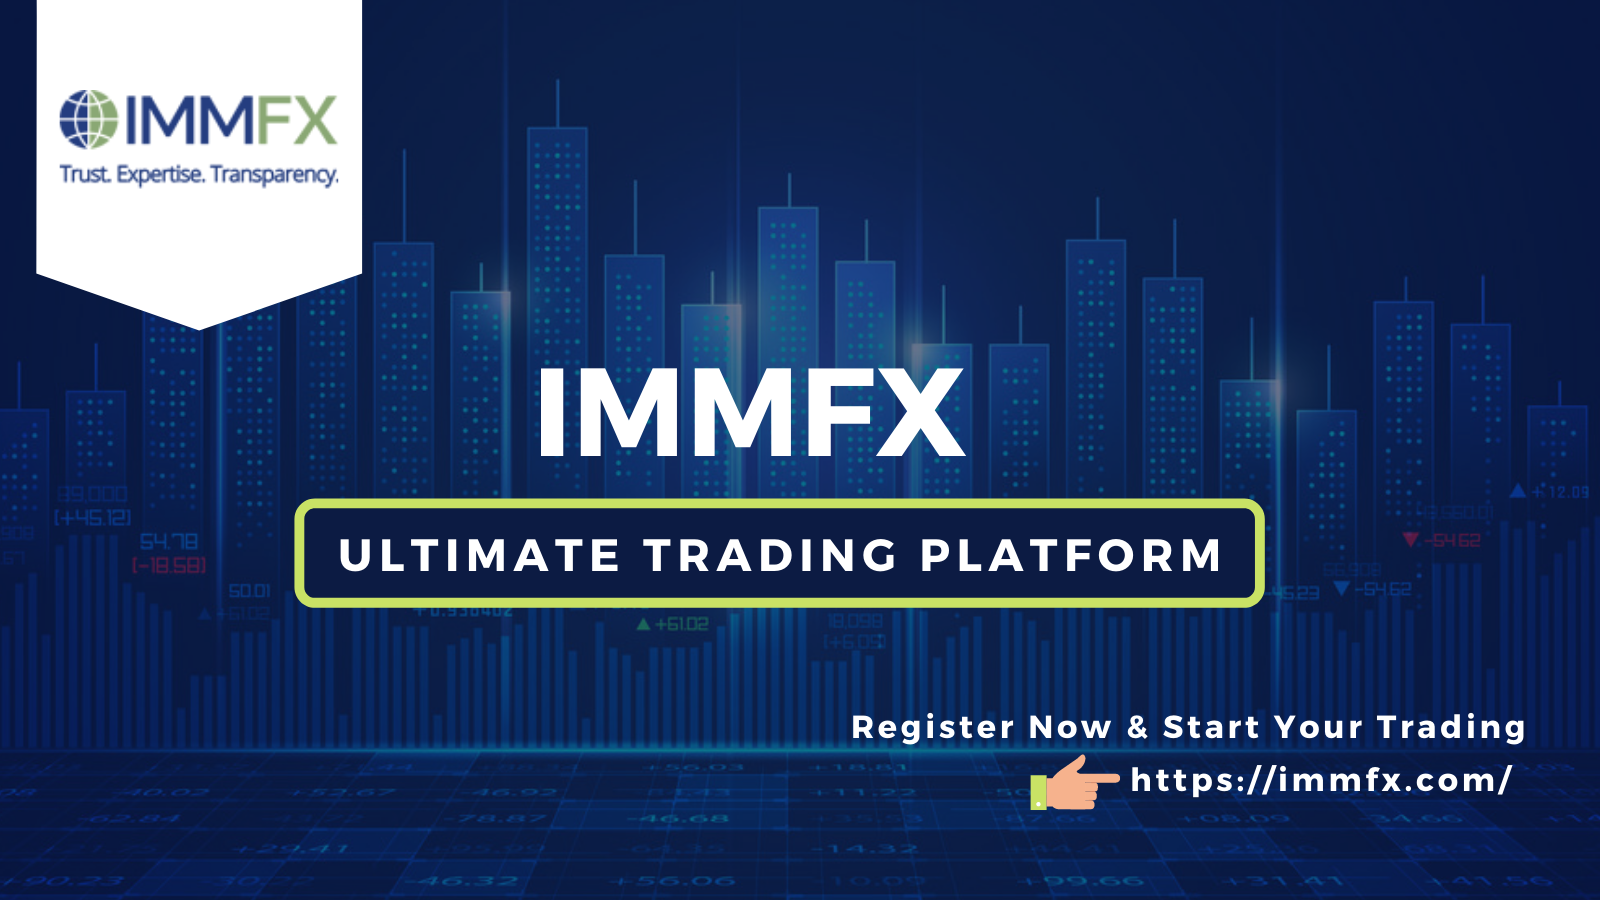 IMMFX Ultimate Trading Platform